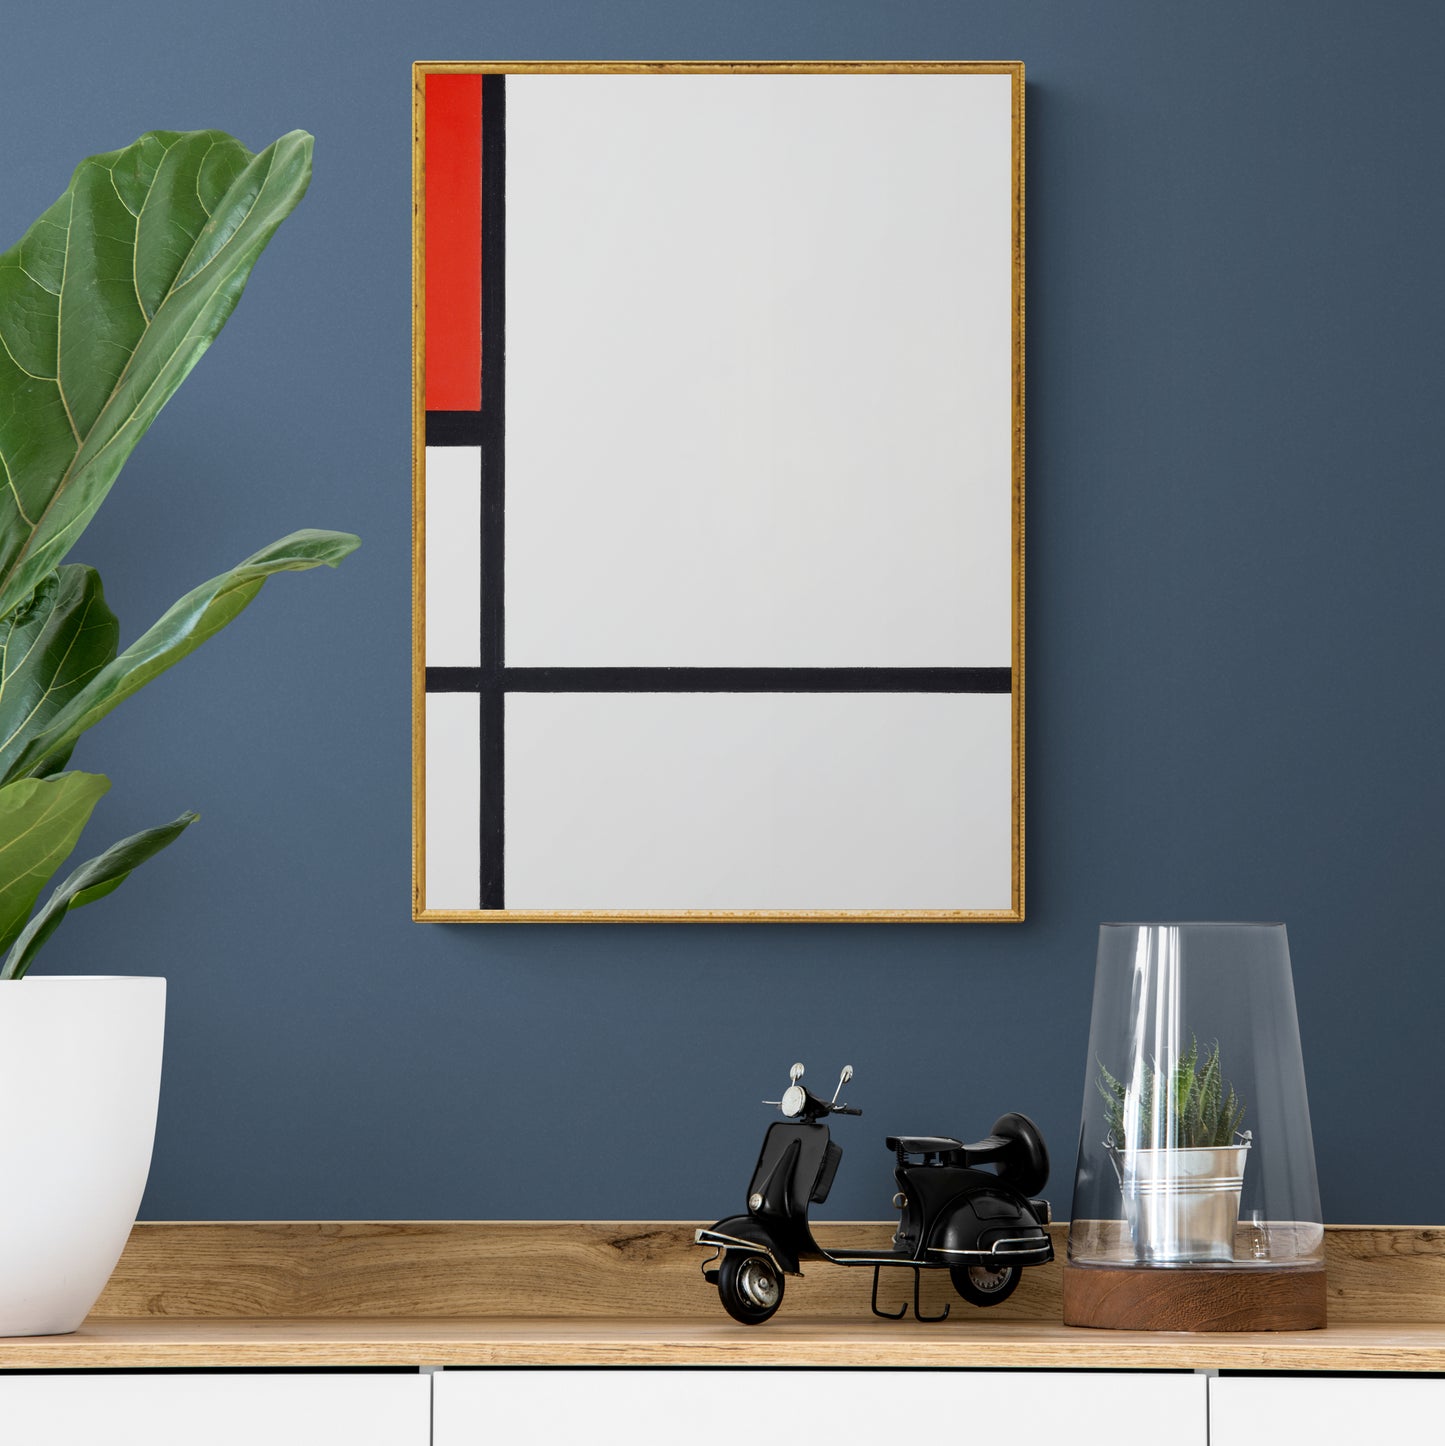 Composition No. 1 by Piet Mondrian